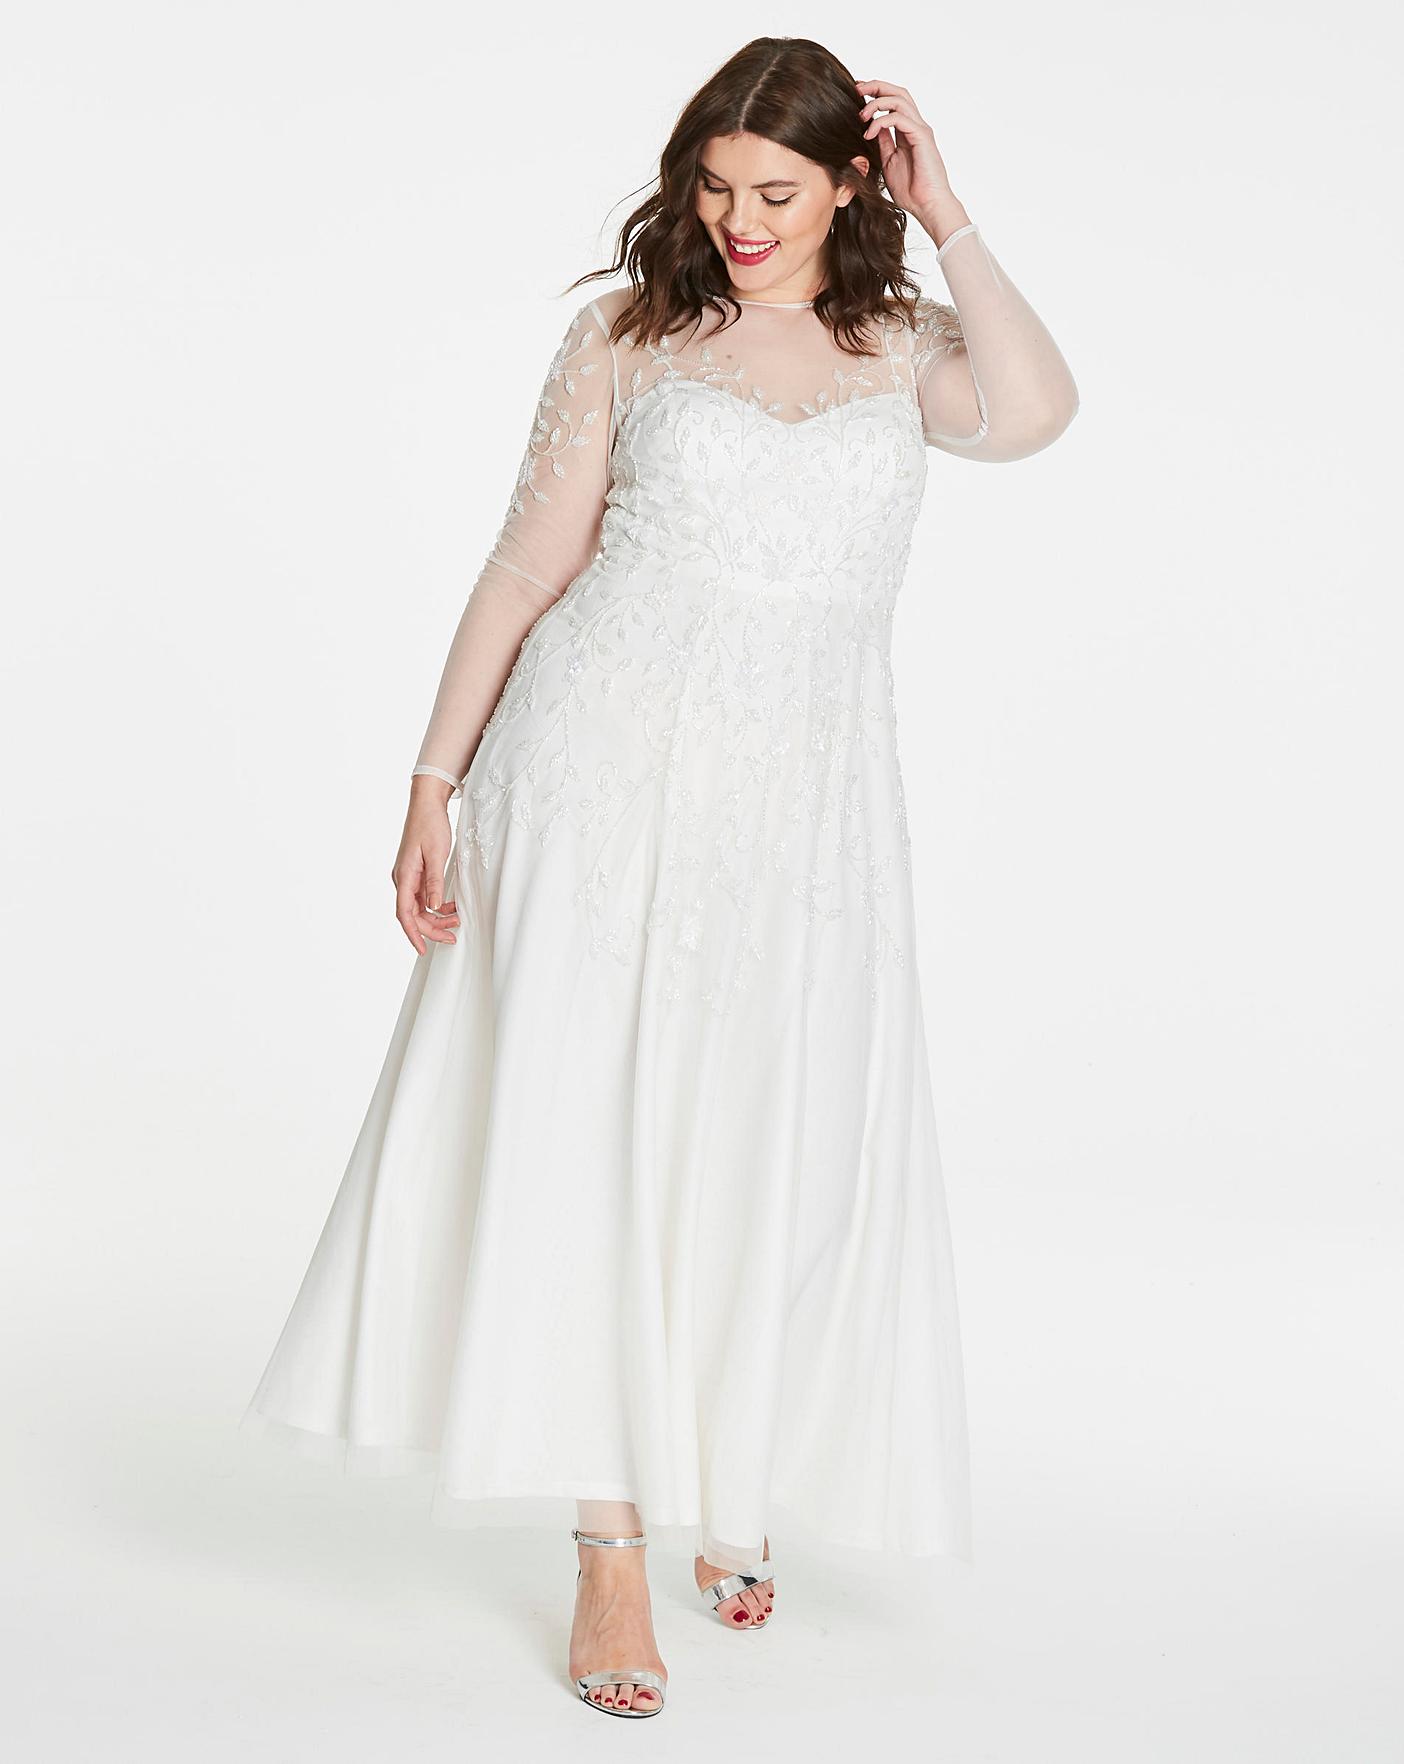 Joanna Hope Beaded Bridal Dress | Simply Be